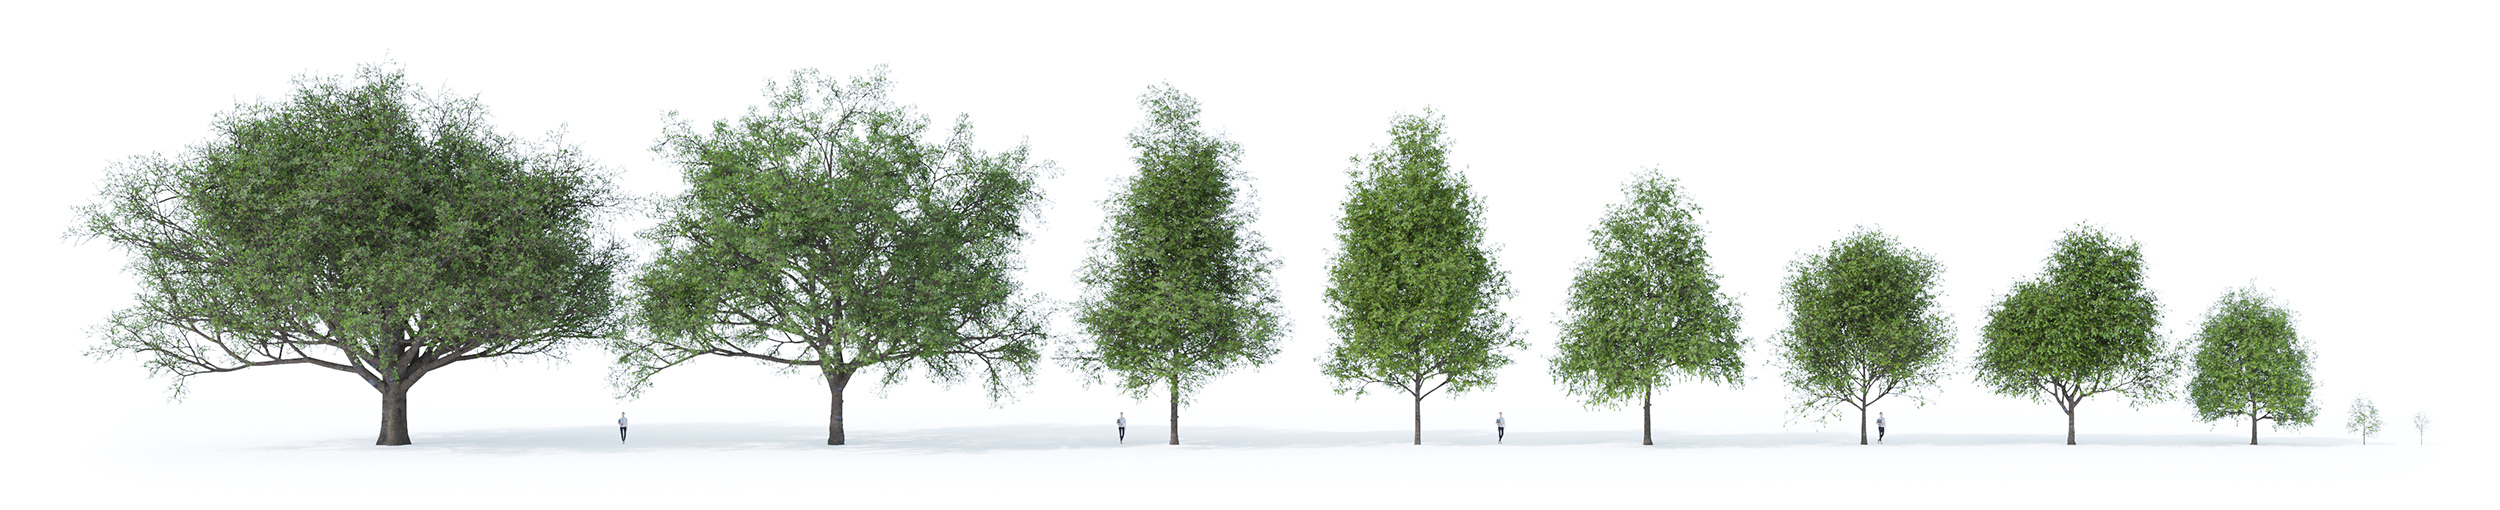 10 3D Oak tree variations